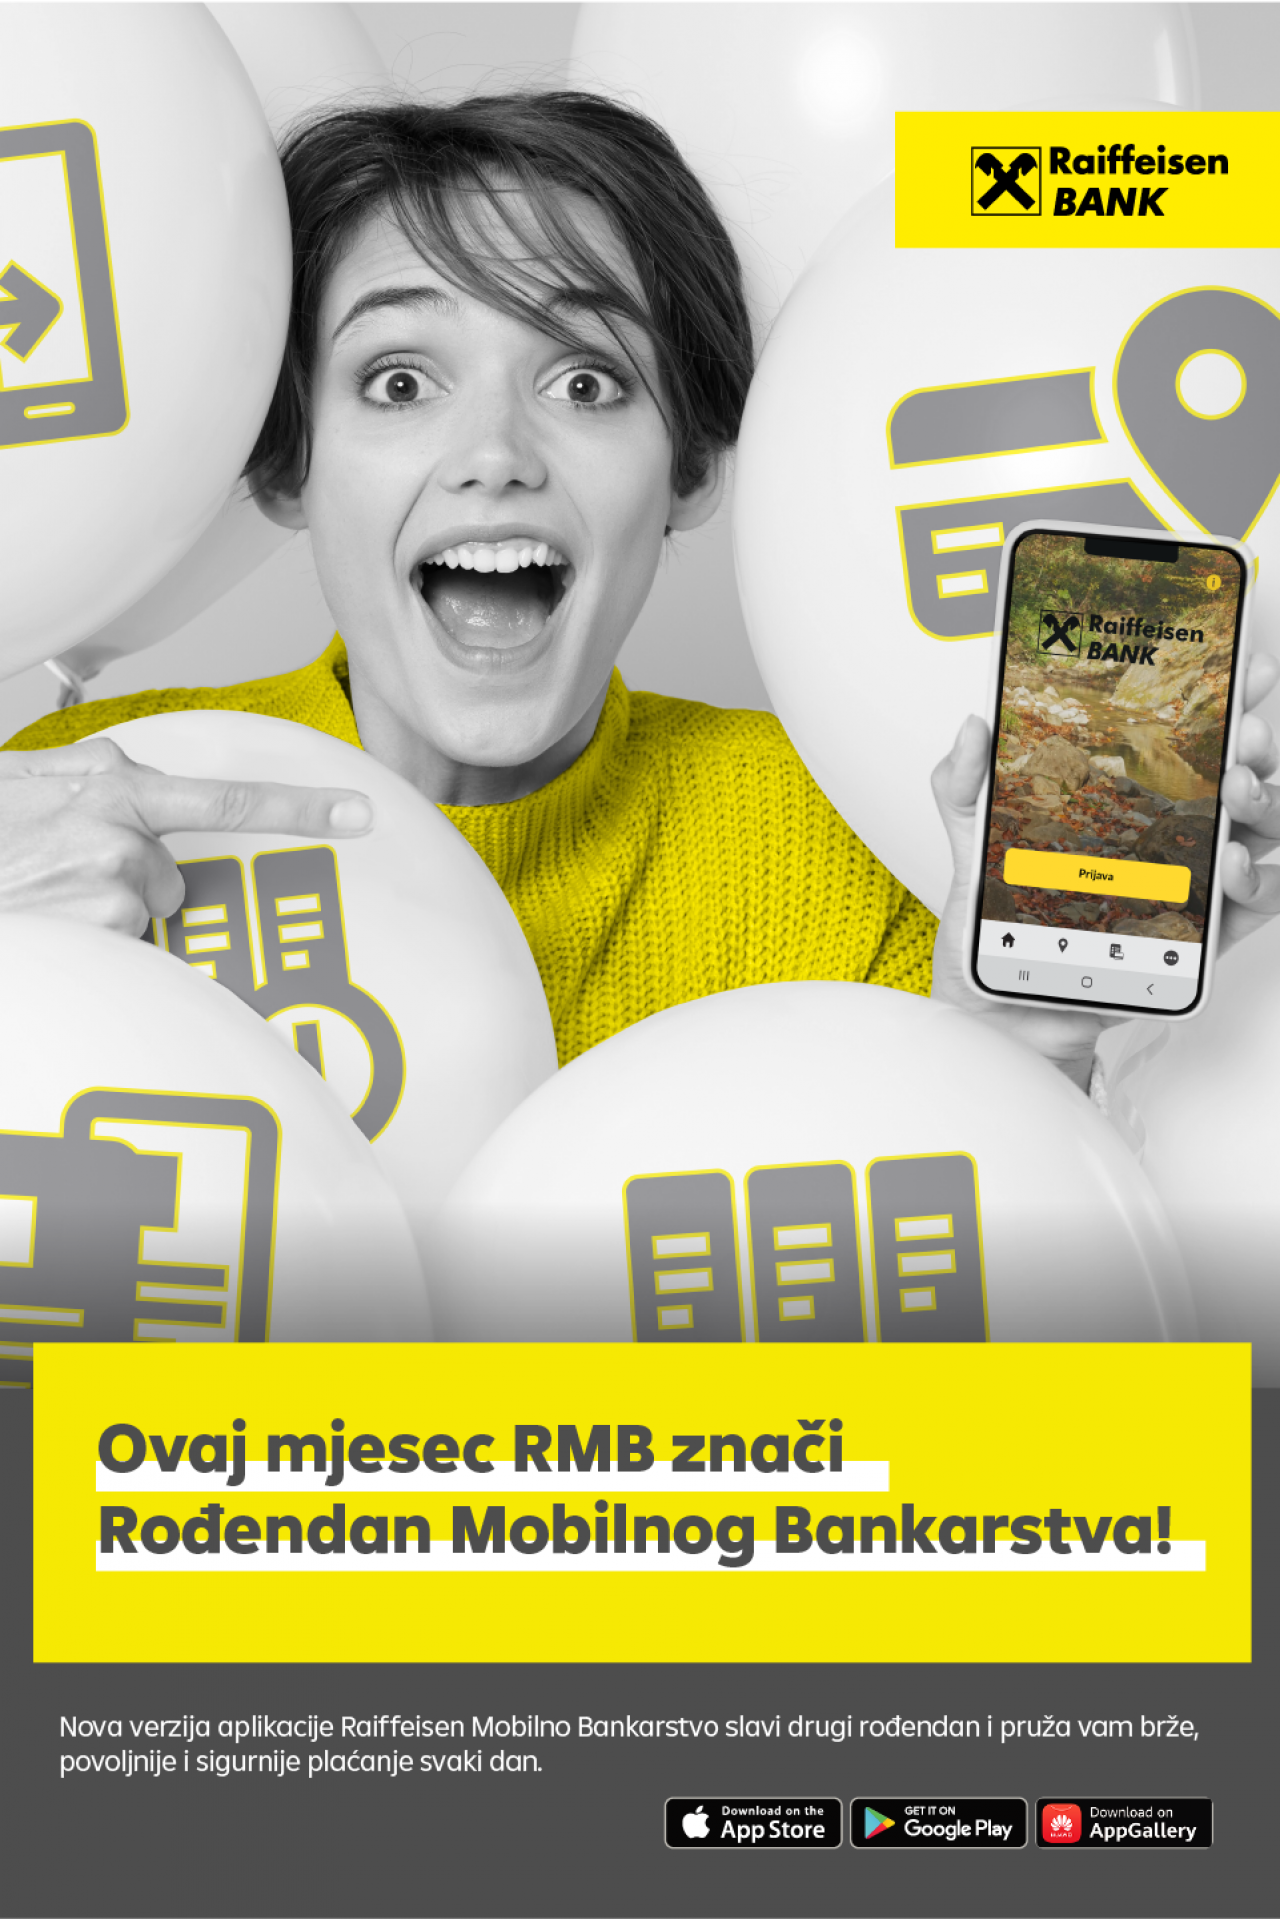 raiffeisen-mobilno-bankarstvo.png